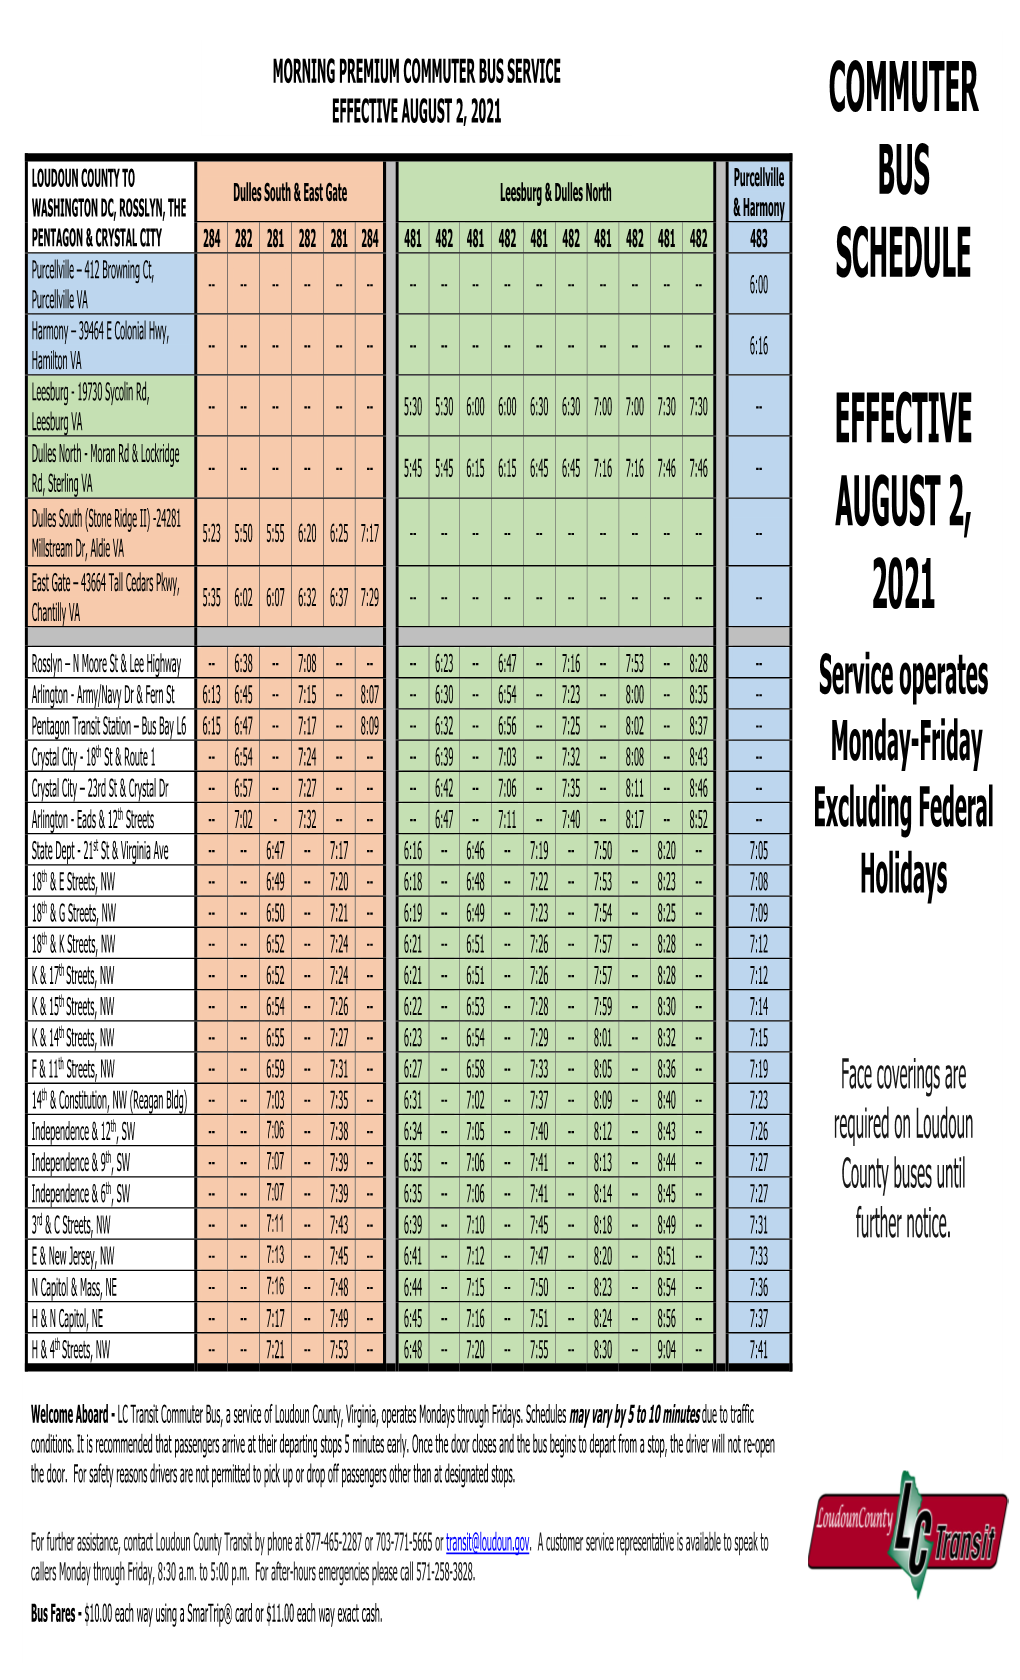 Commuter Bus Schedule Effective August 2, 2021